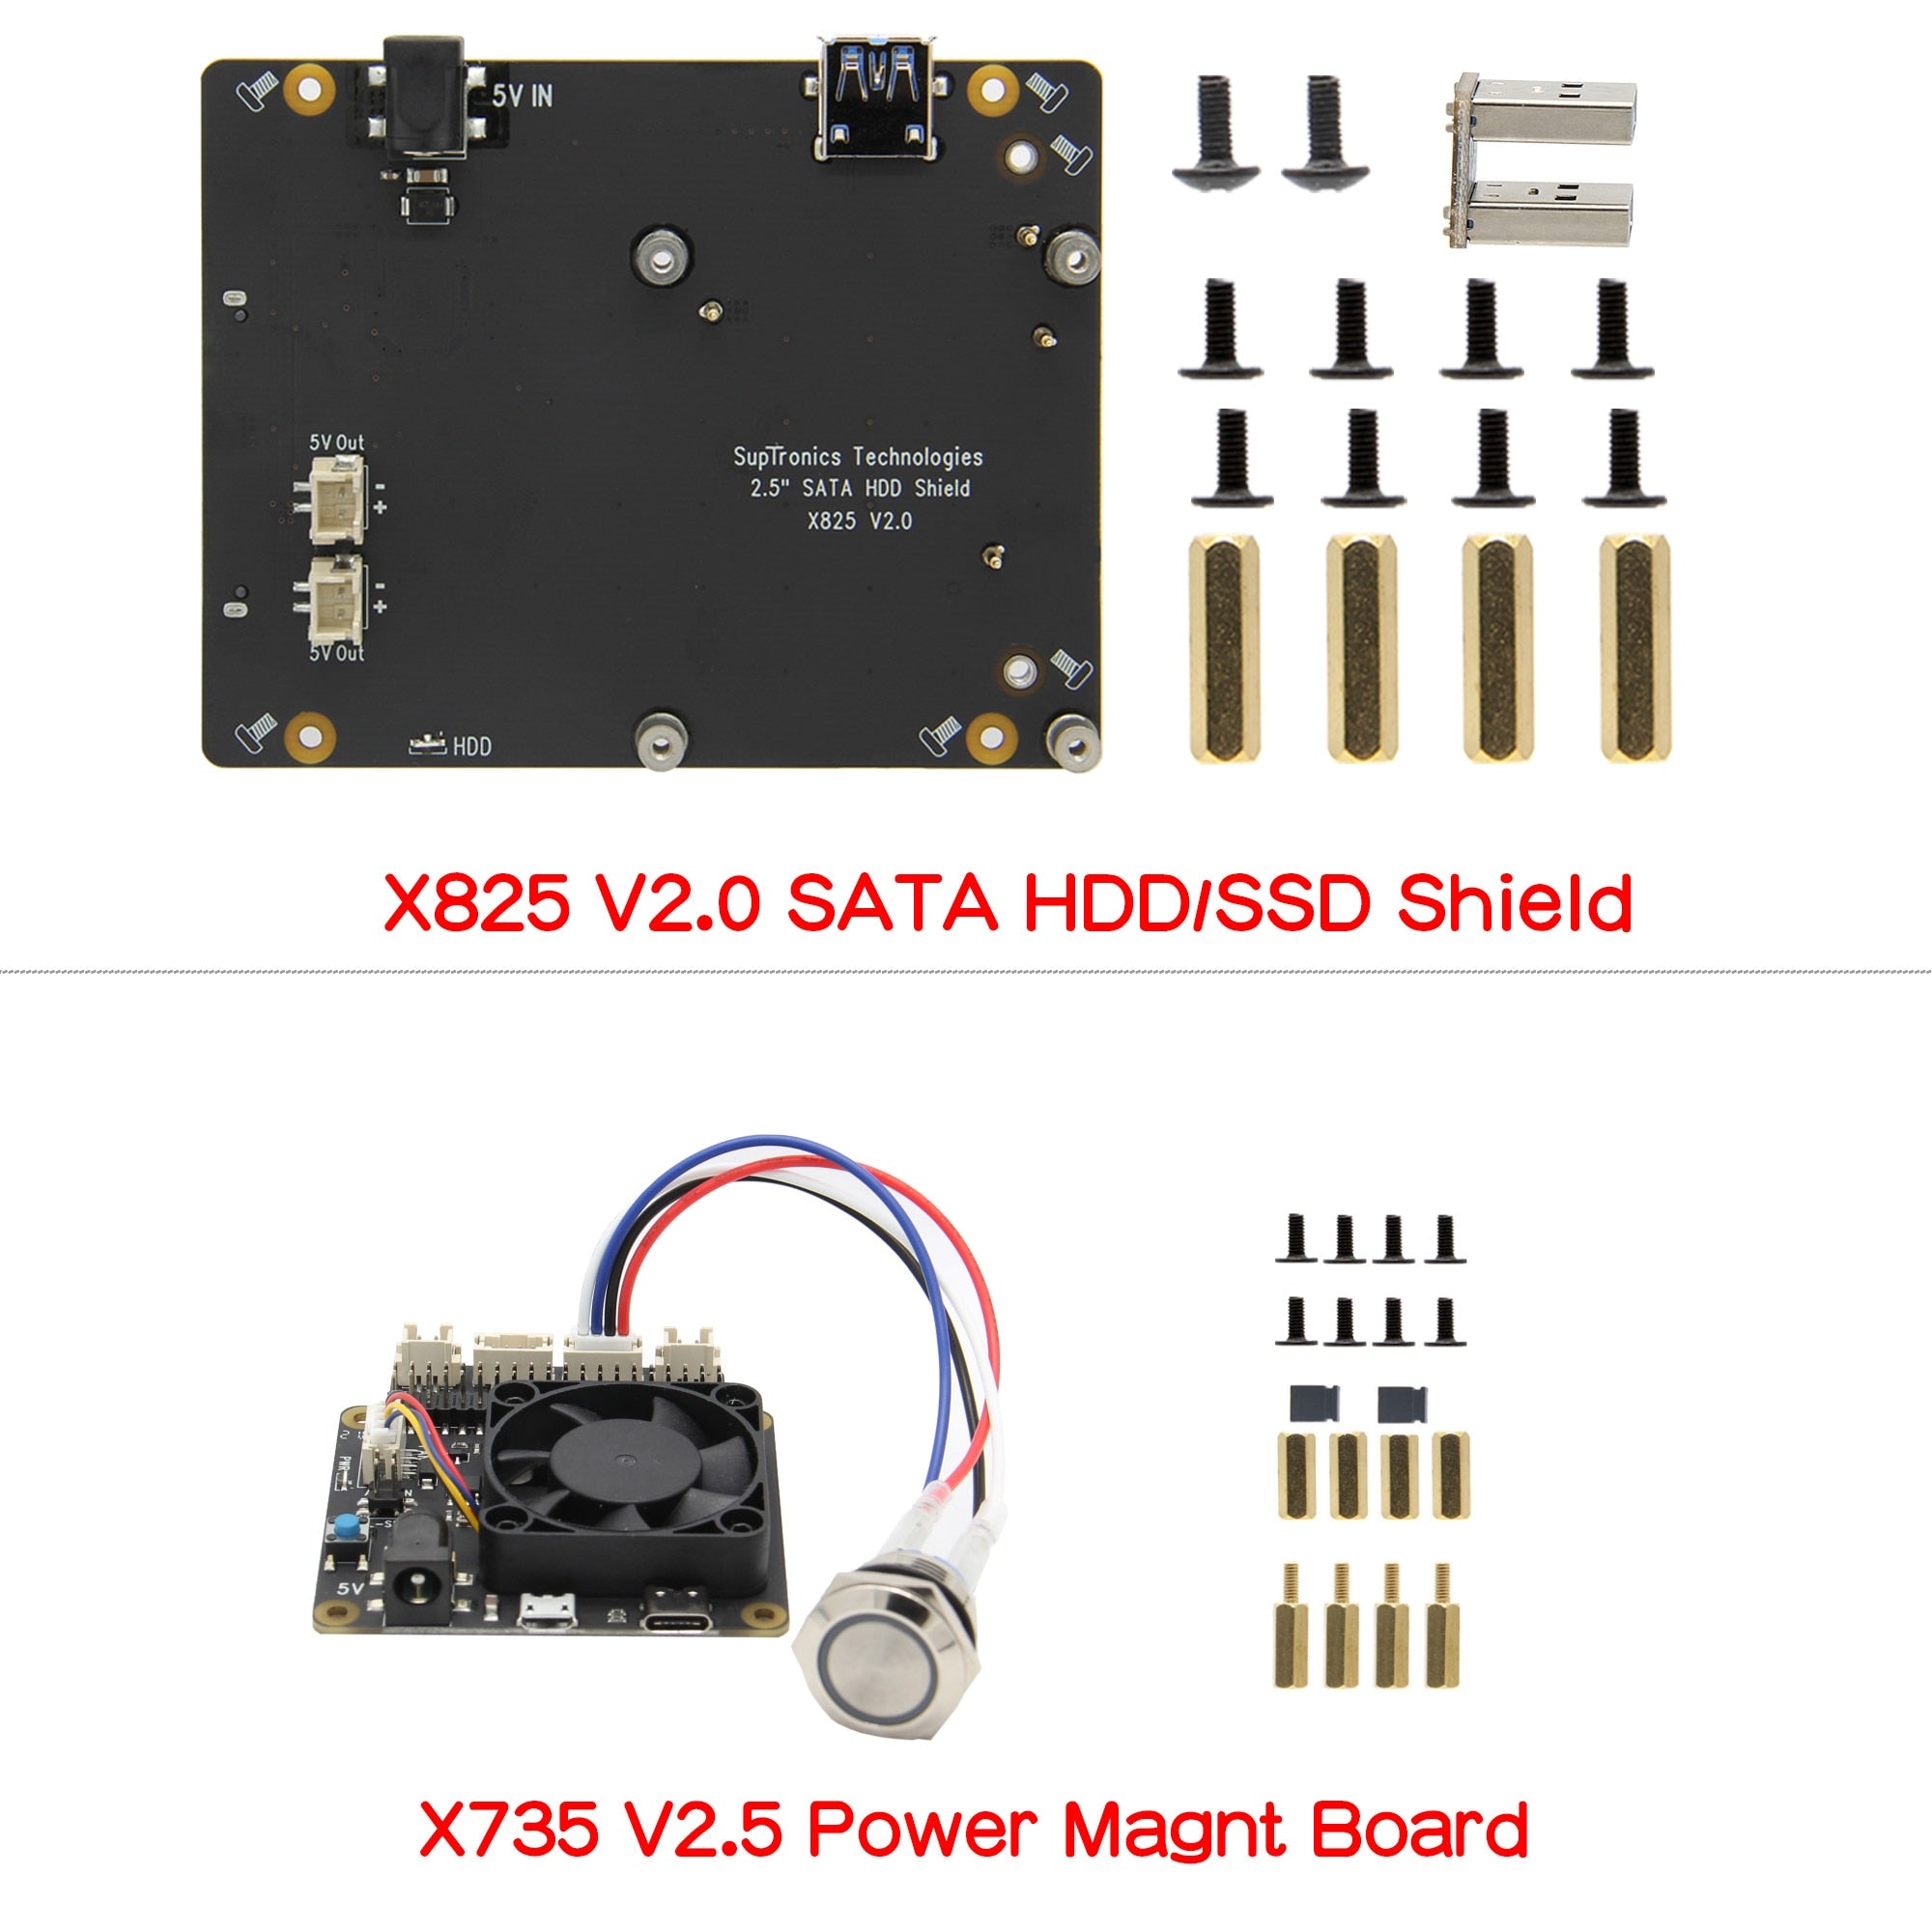 Geekworm X825-C8 (X825 V2.0) Metal Case+Power Switch+Cooling Fan Support  X825 V2.0 2.5 inch SATA SSD/HDD Shield & Raspberry Pi 4 Model B & X735